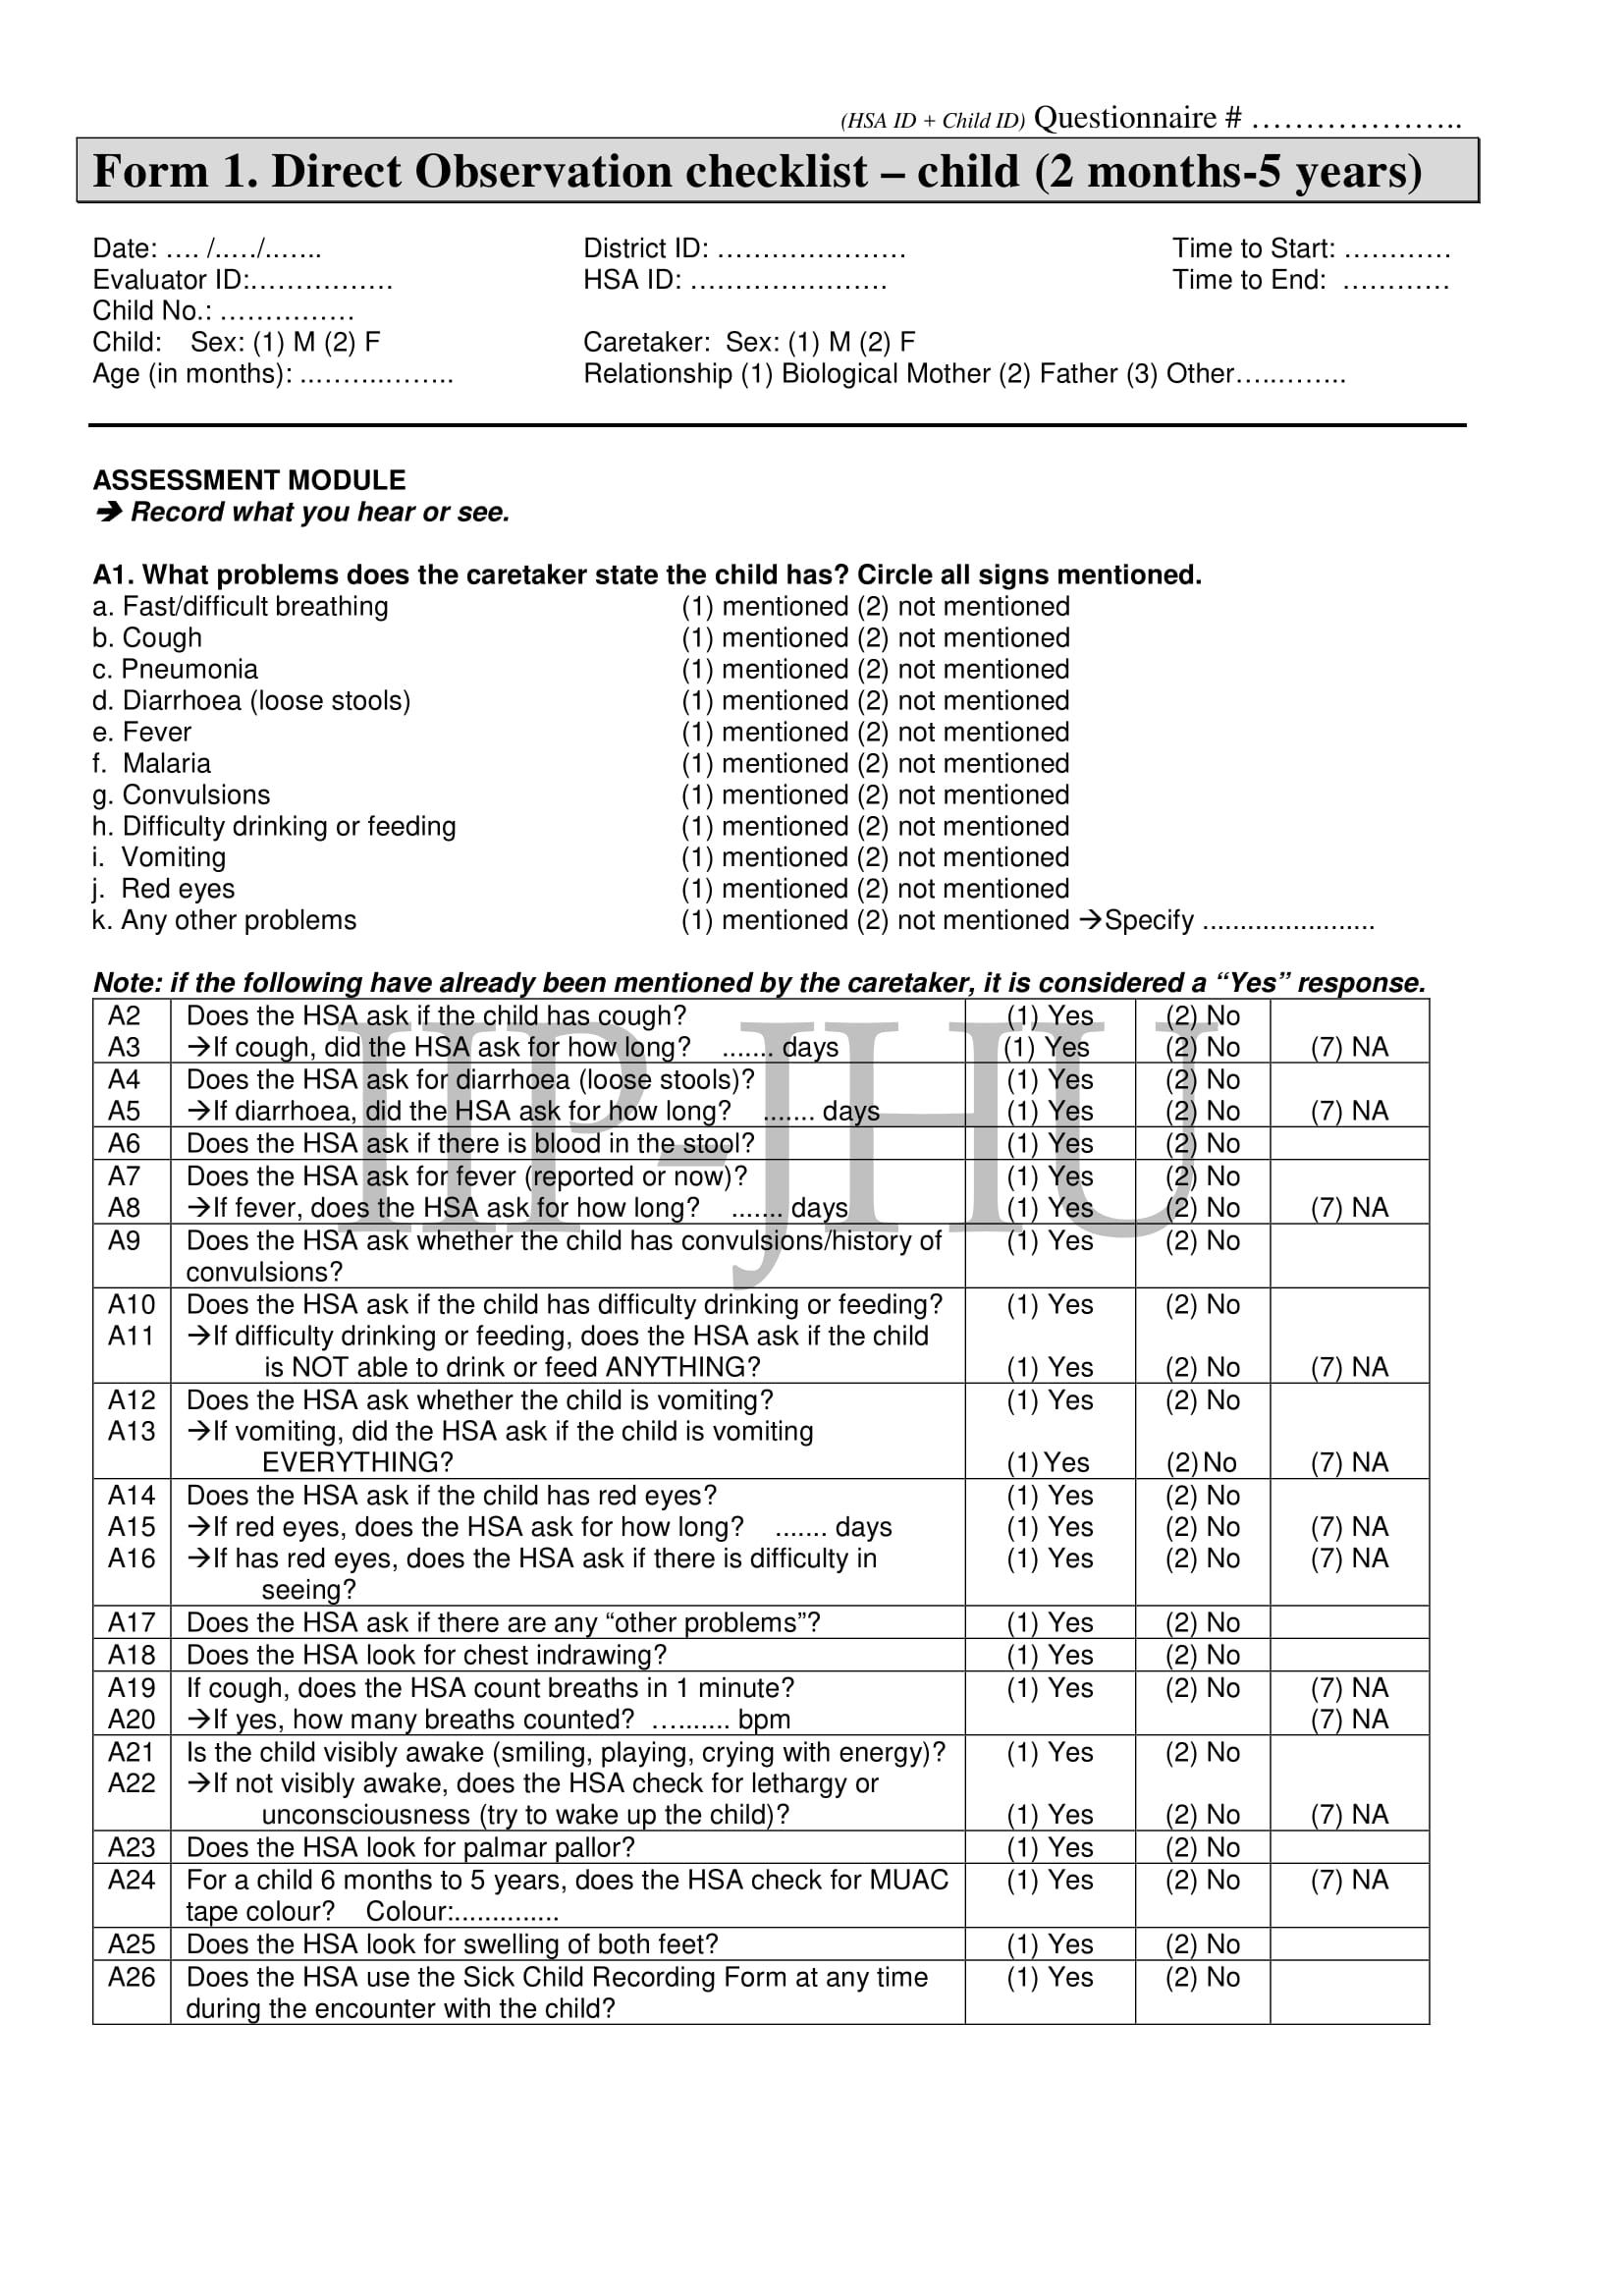 direct child observation checklist form 01